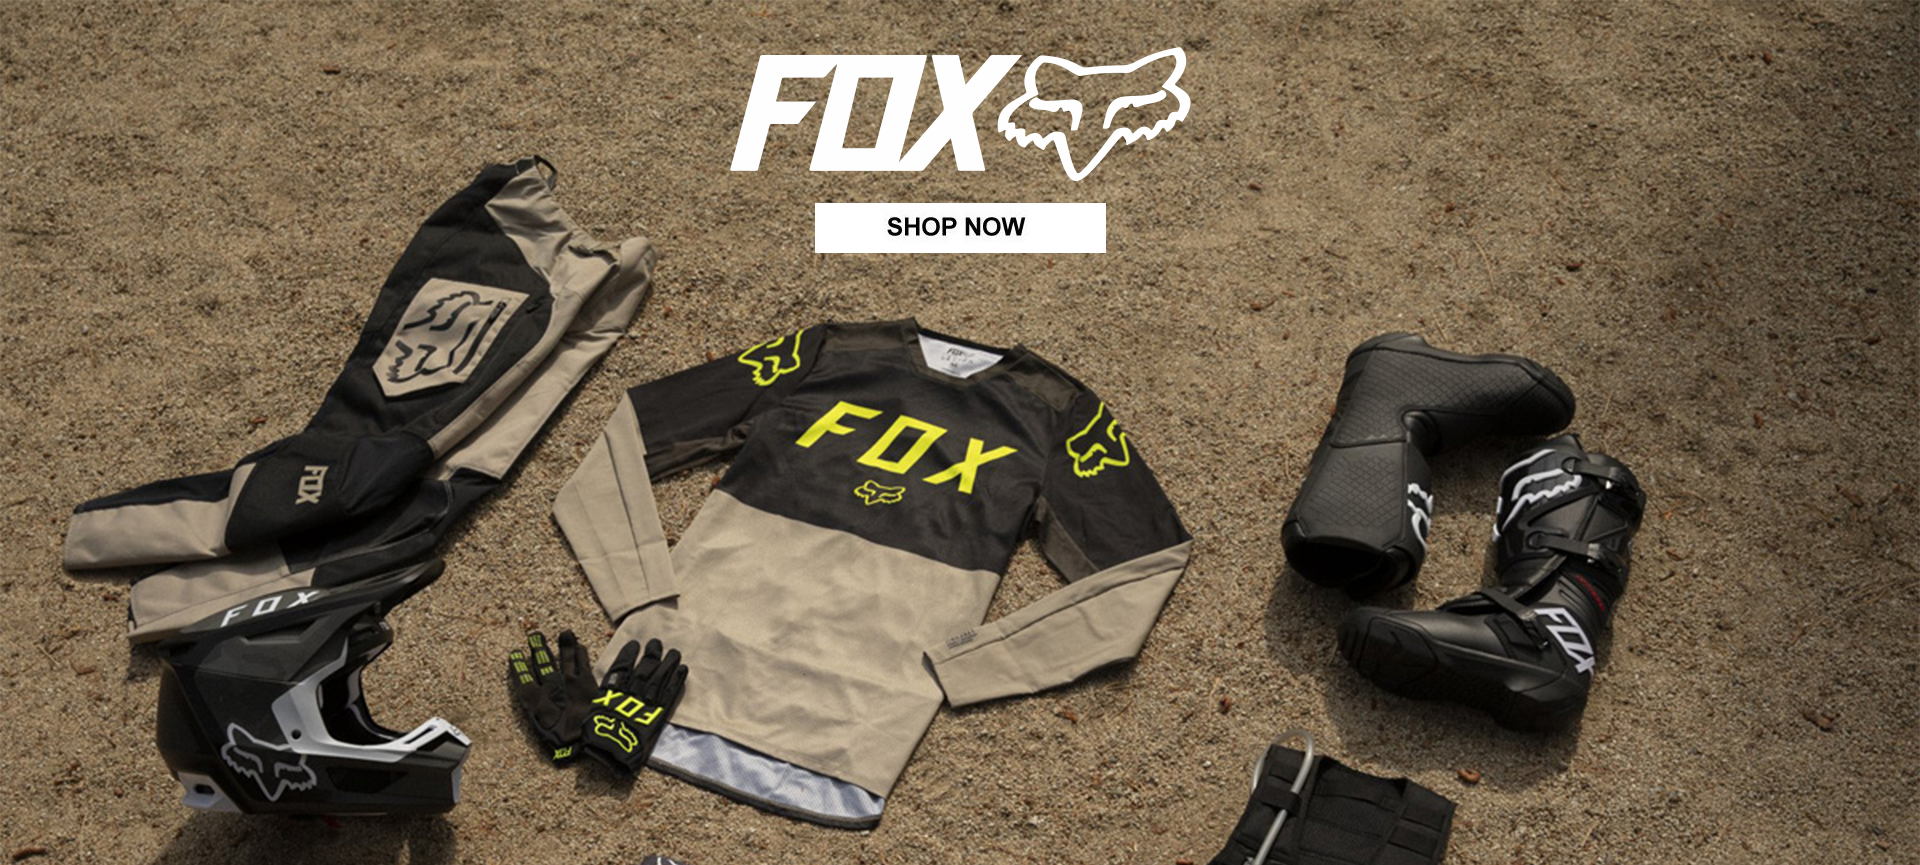 Reduction Asia dress up Fox Racing Romania. Echipamente si protectii moto si bicicleta.  Distribuitor oficial in Romania - Foxracing Accesorii Moto Cross, Enduro